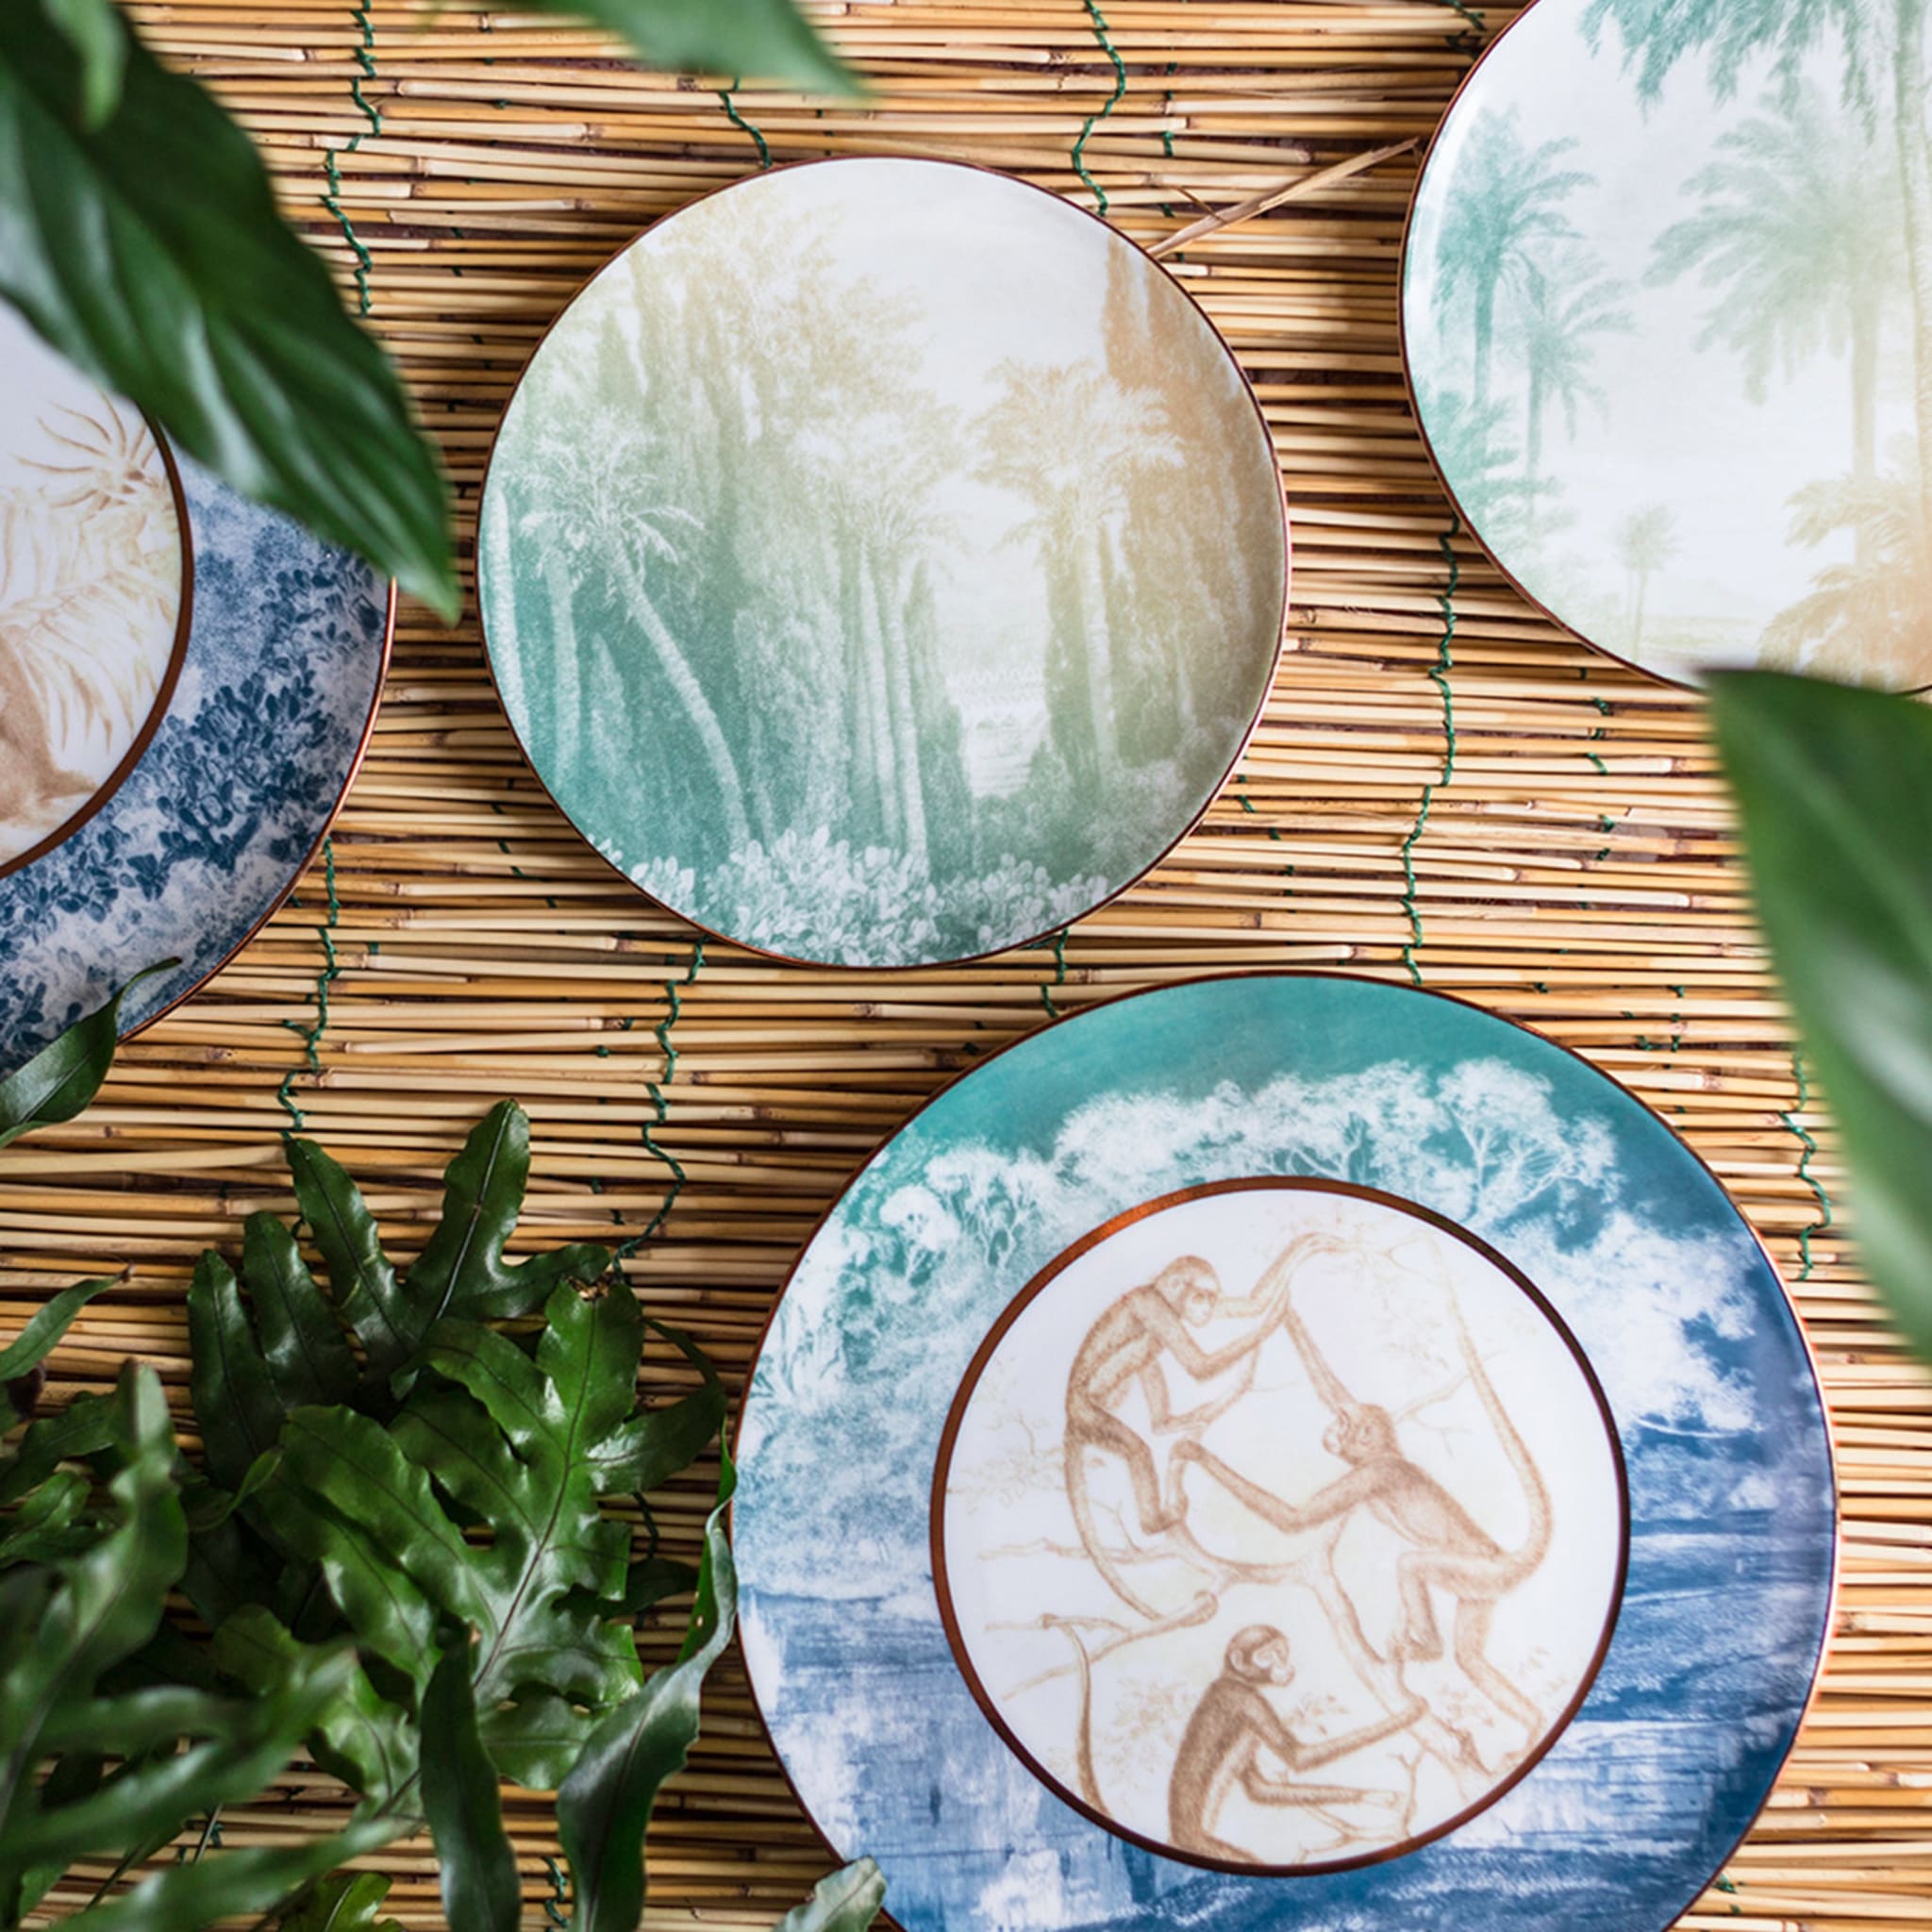 Galtaji Porcelain Dinner Plate With Landscape And Monkeys #5 - Alternative view 1